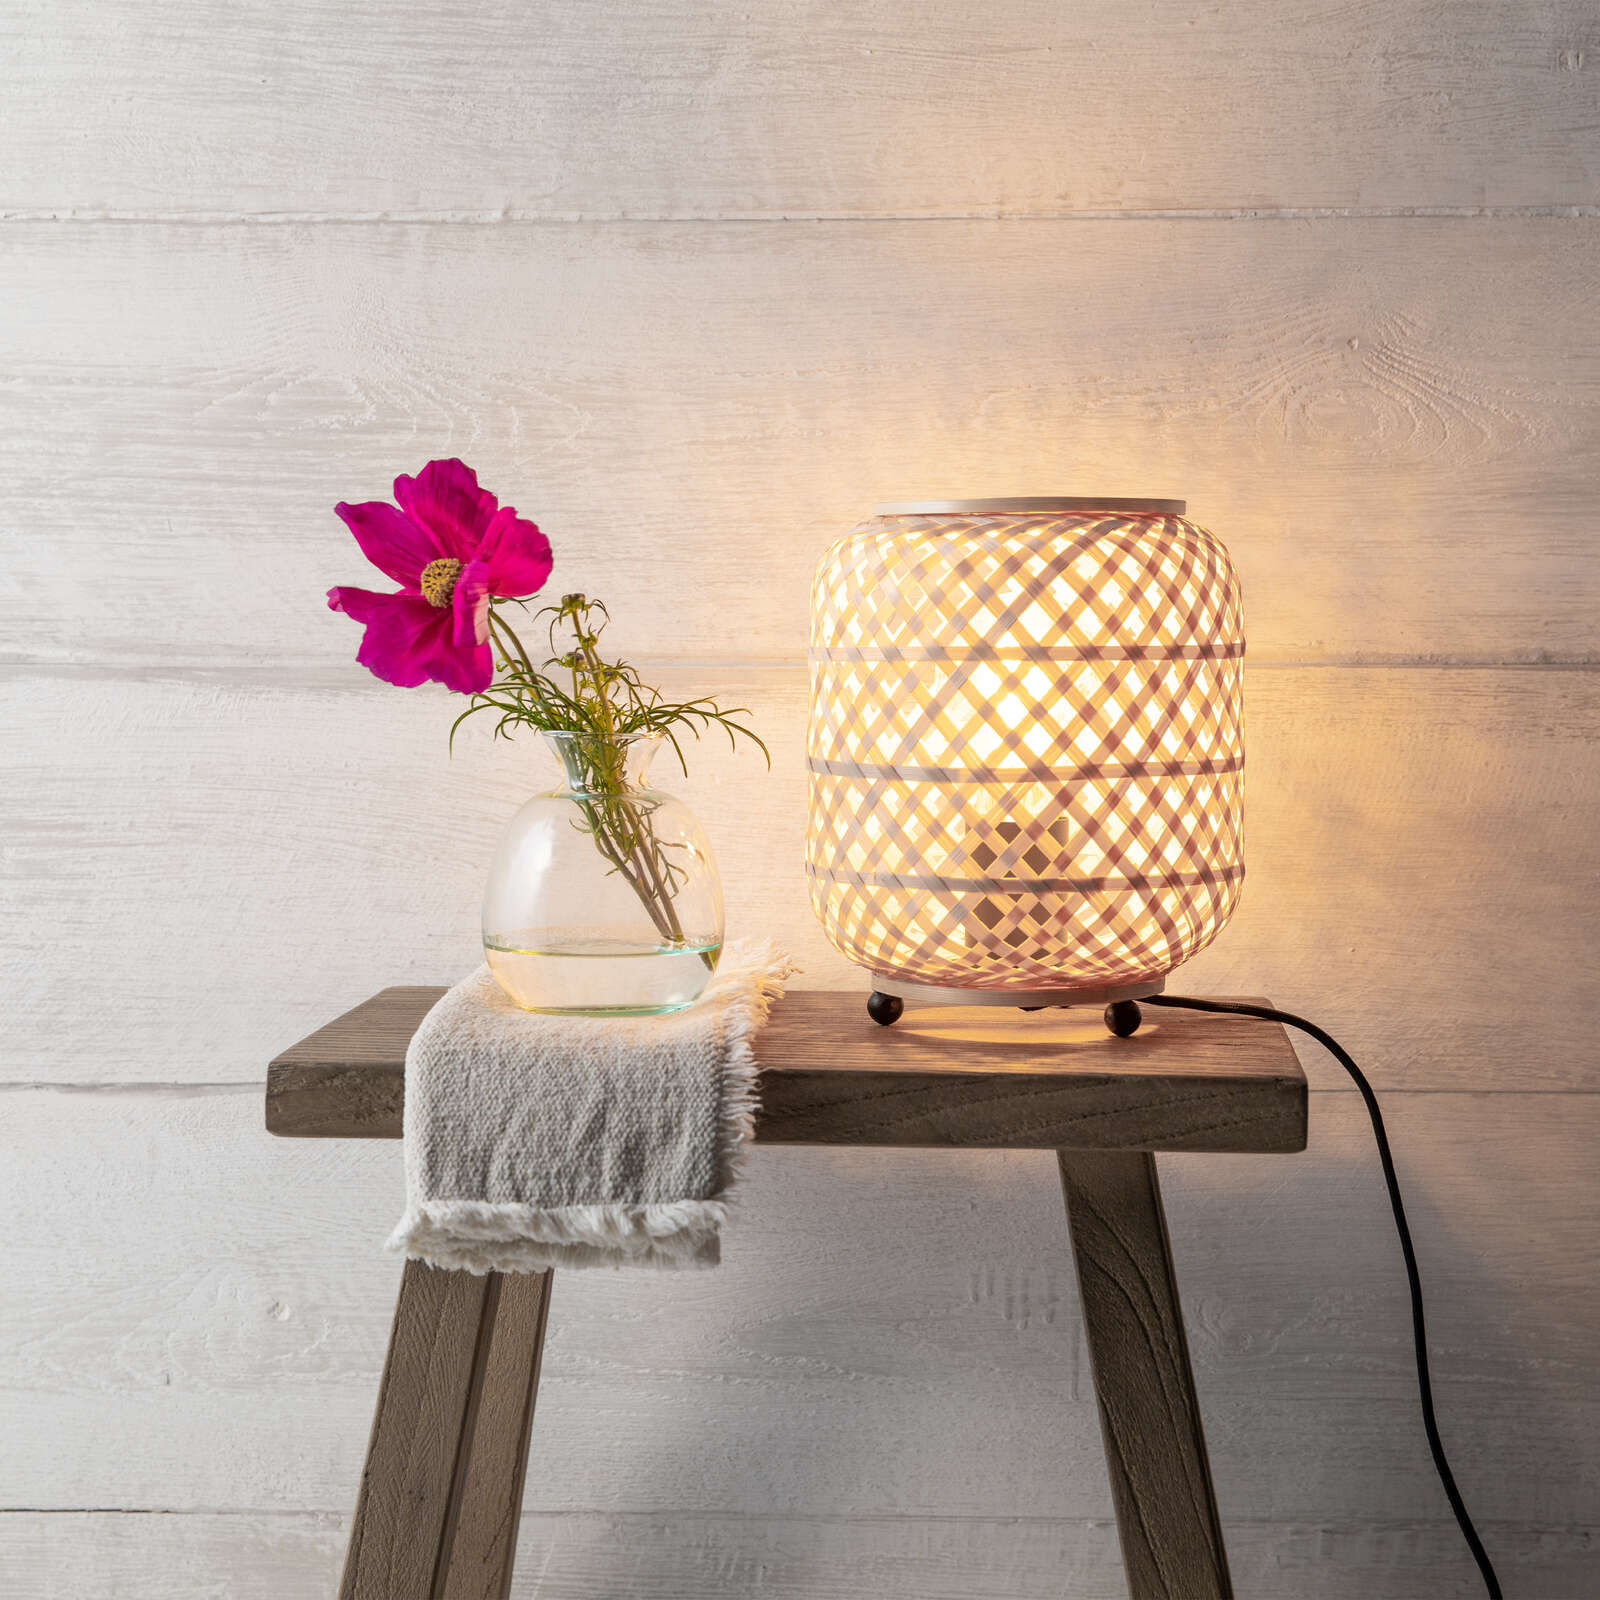             Bamboo table lamp - Lina - Brown
        